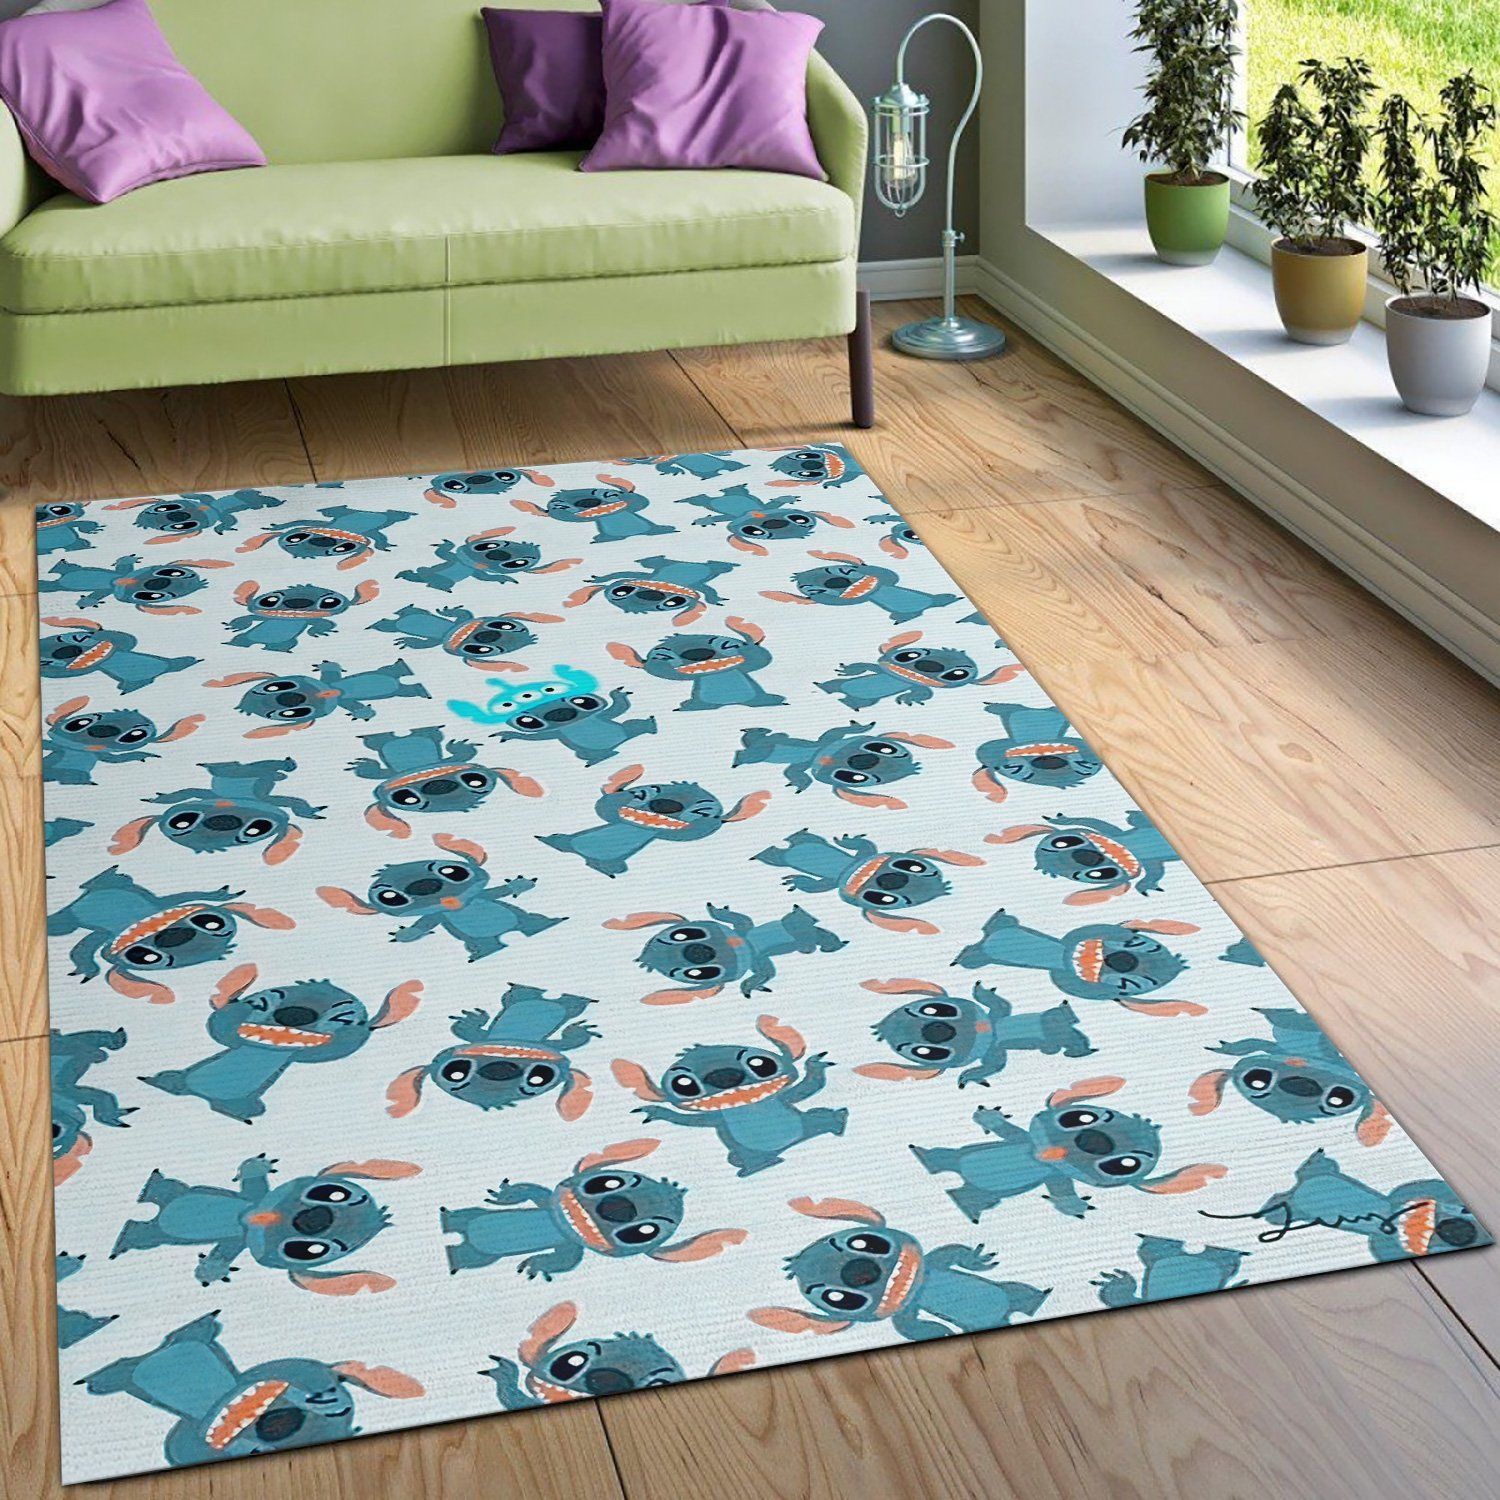 Stitch Disney Movies Area Rugs Living Room Carpet Floor Decor The US Decor - Indoor Outdoor Rugs 3